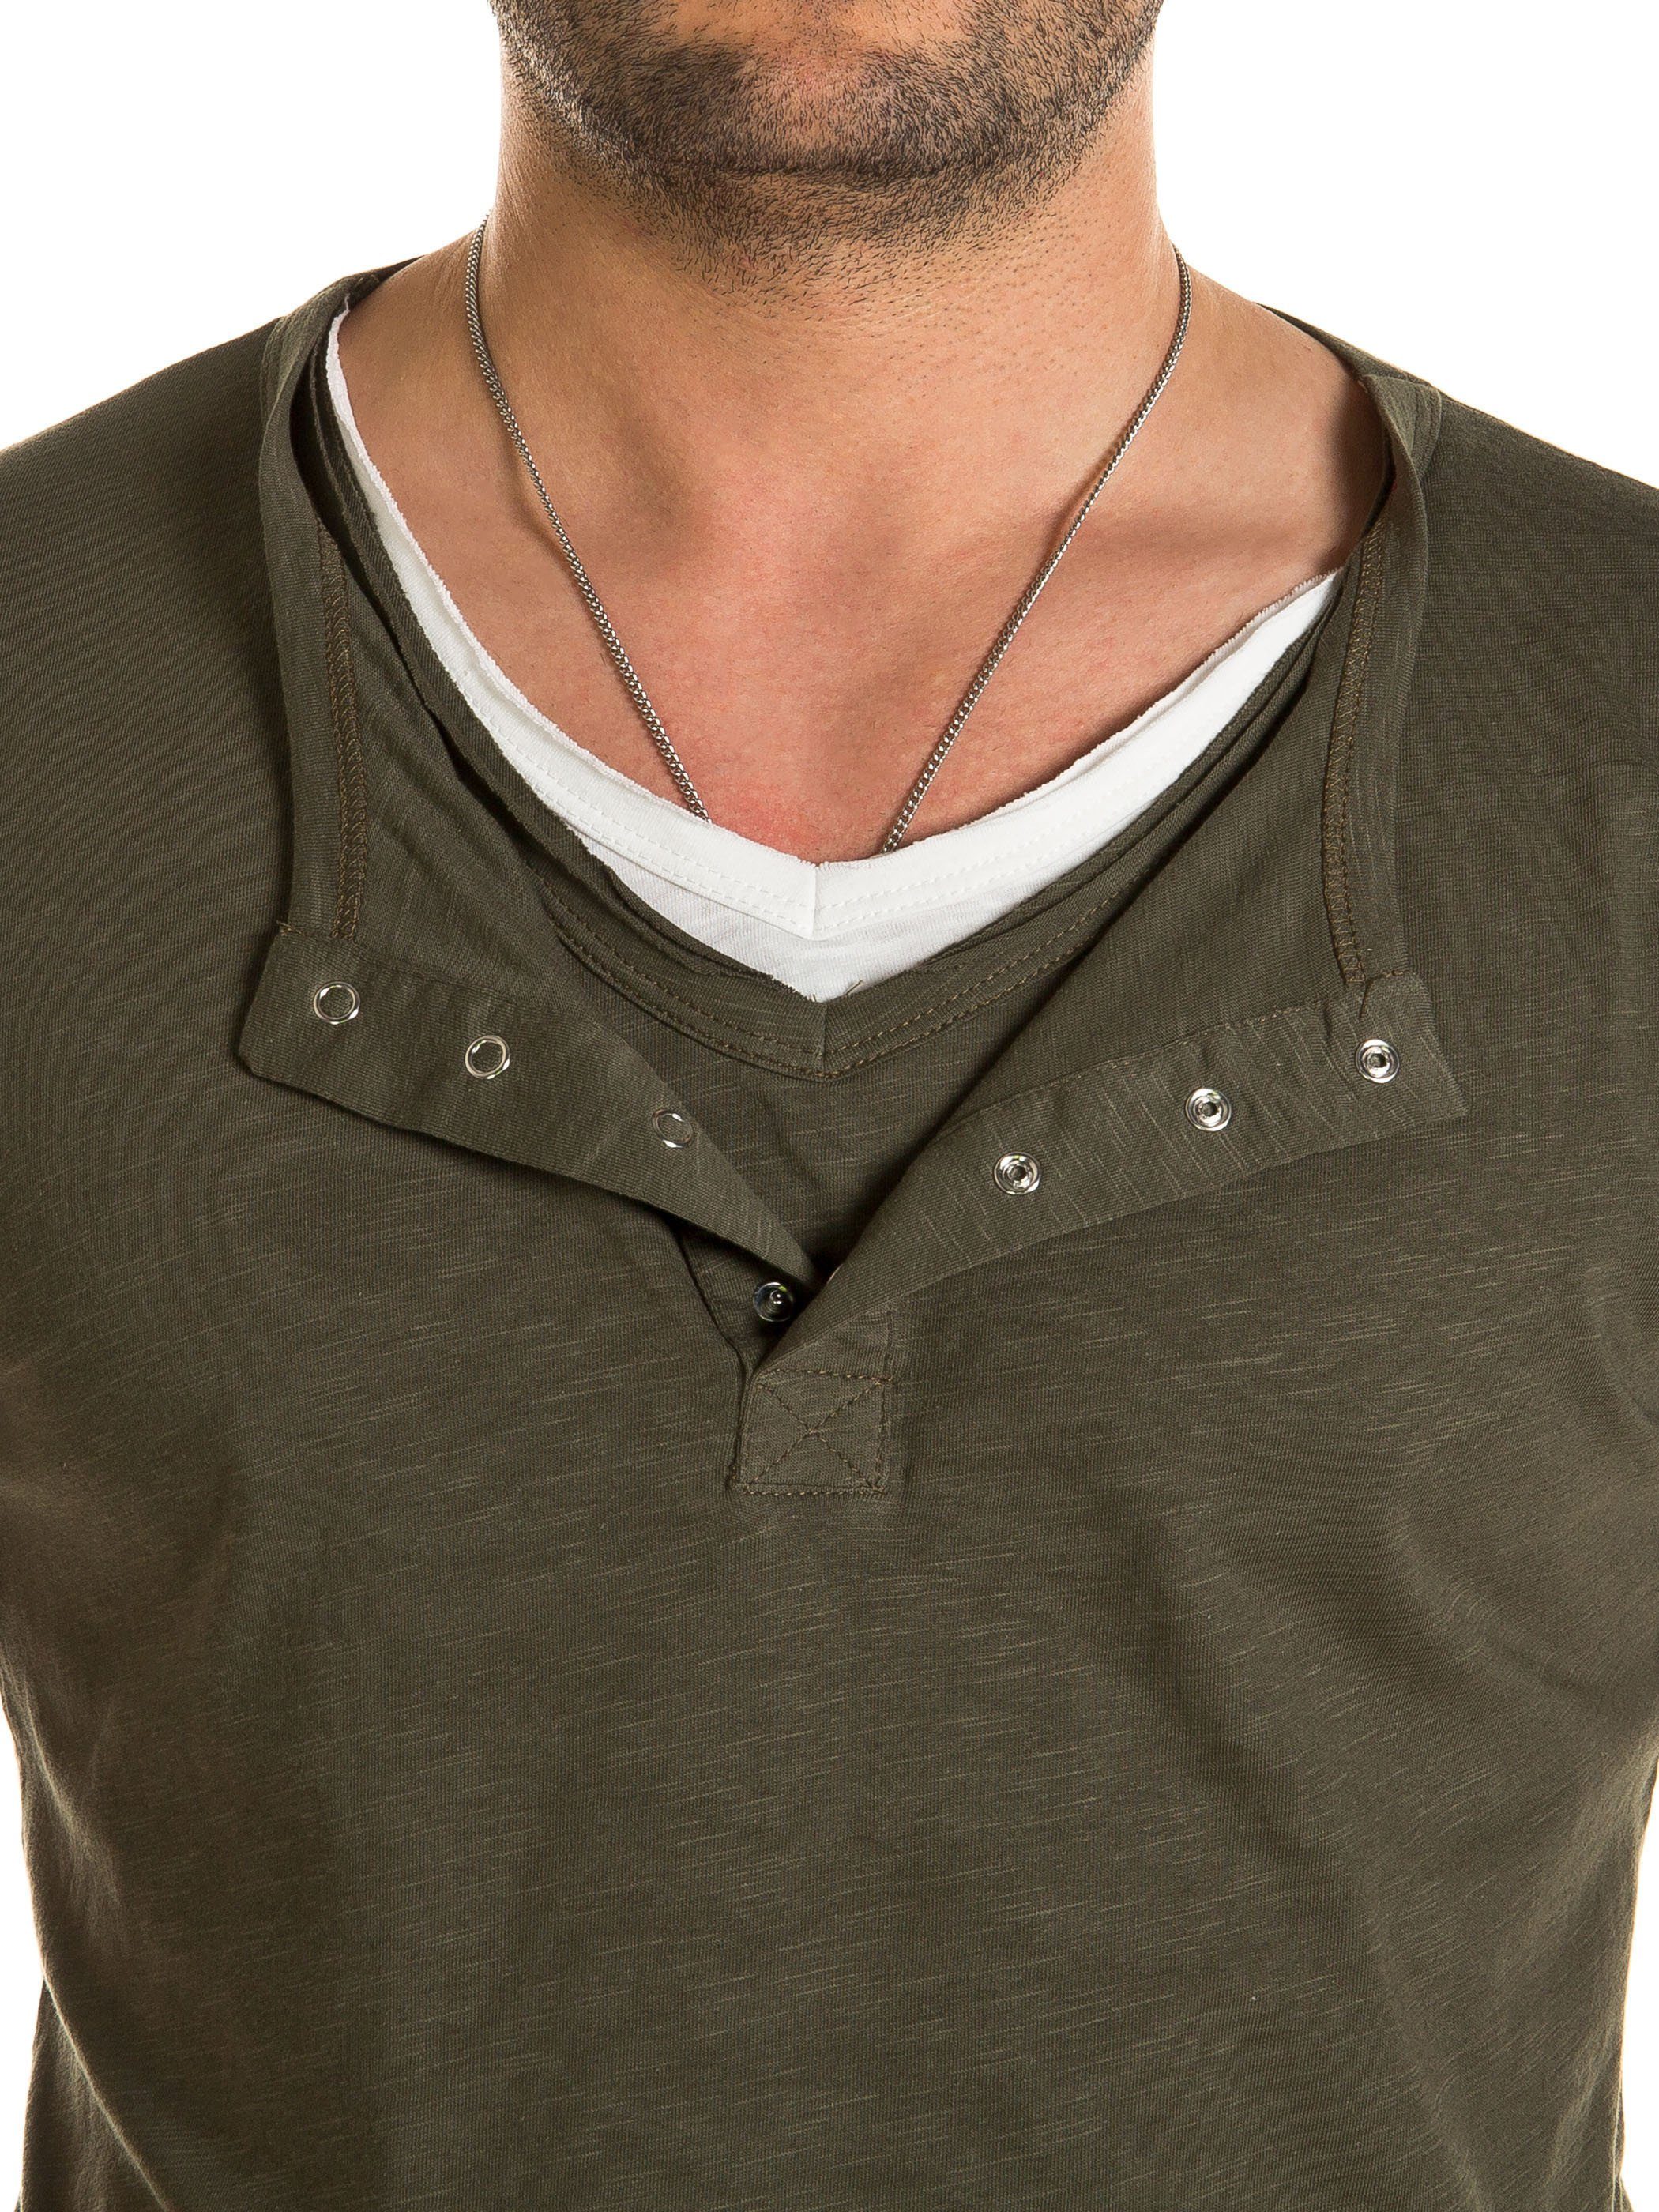 190511) Double V-Neck Layer T-Shirt V-Neck T-Shirt (Packung) Layer (grape Double Grau Pete leaf WOTEGA Pete T-Shirt